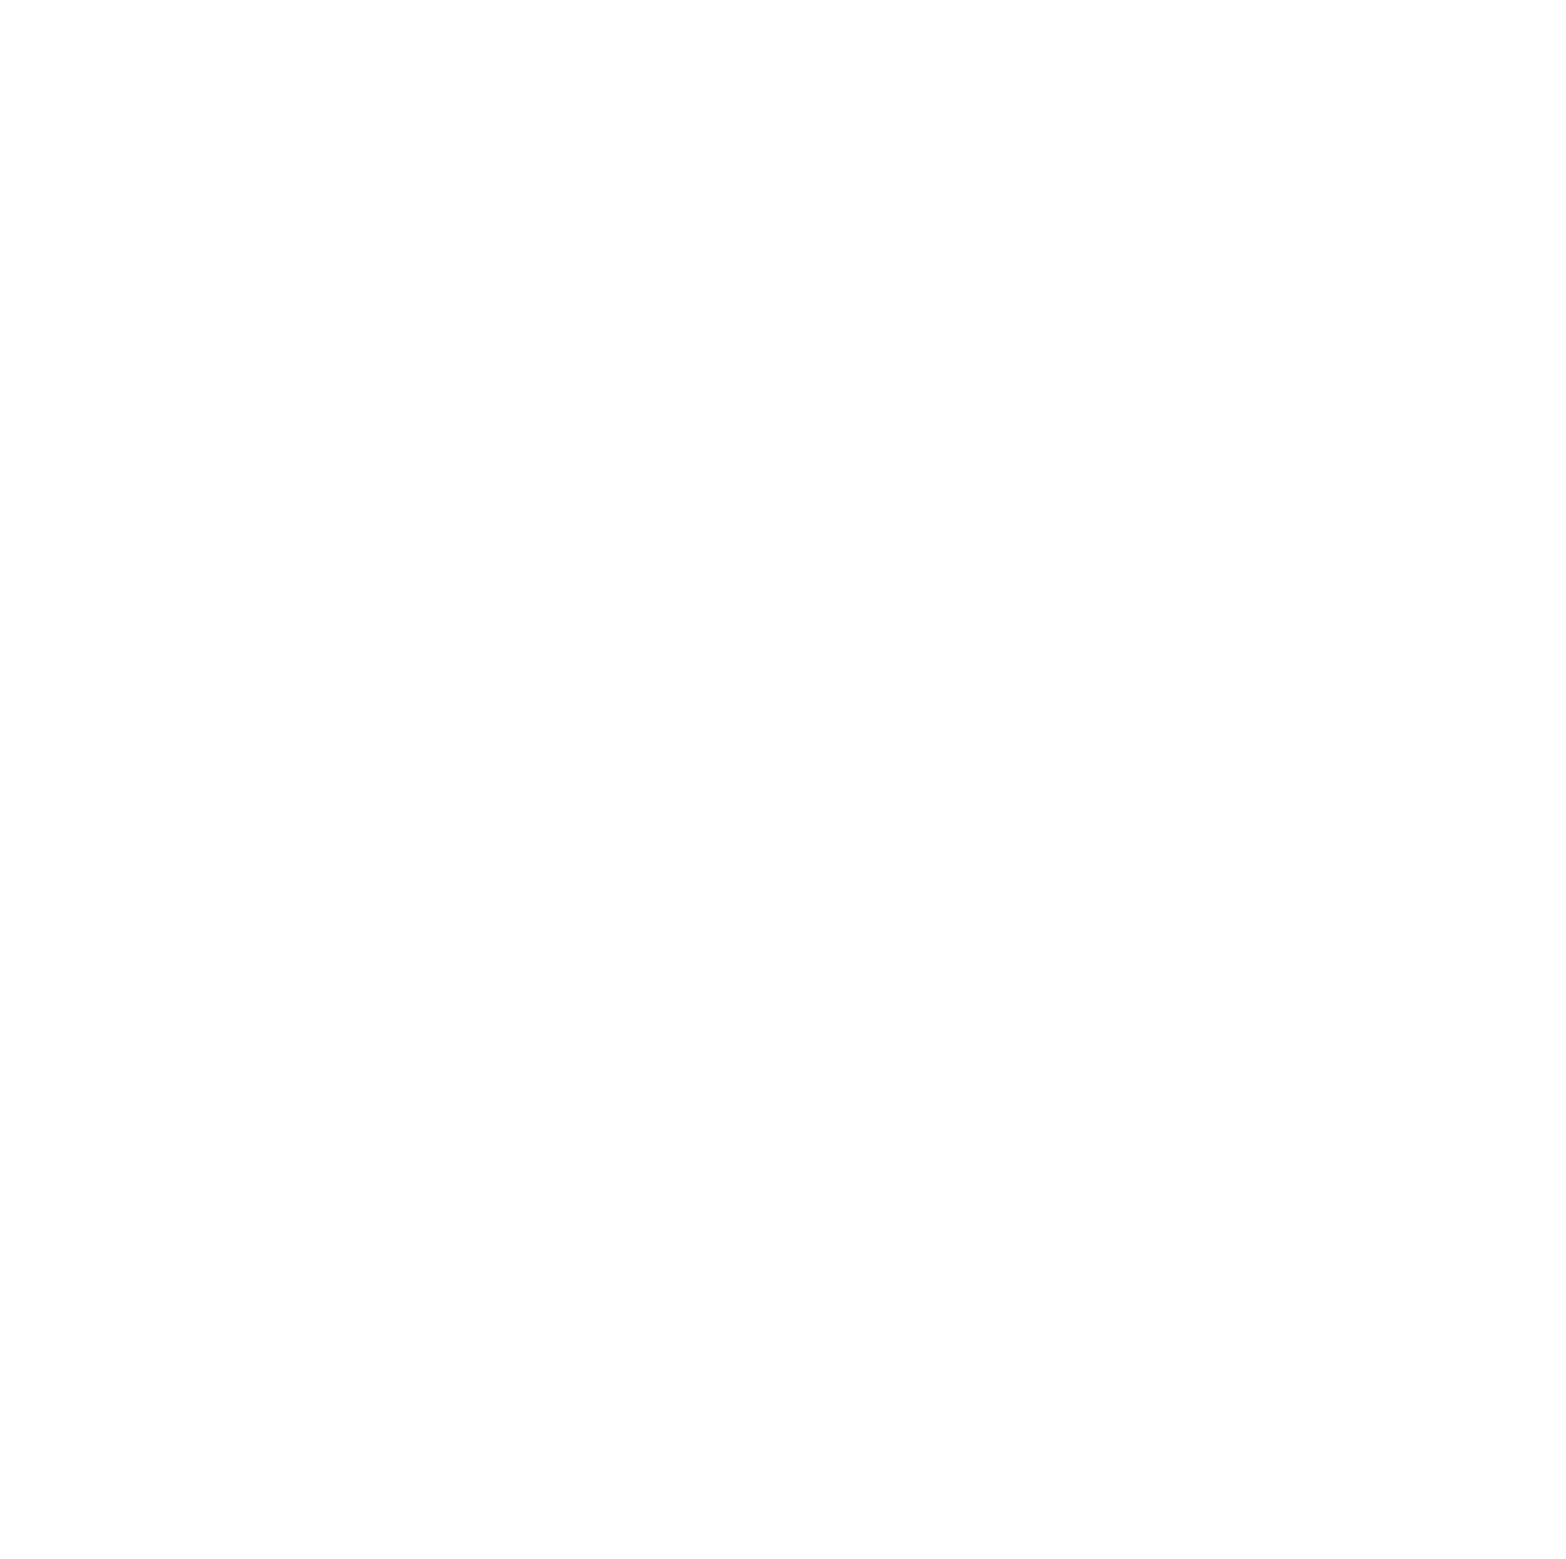 Immobel logo pour fonds sombres (PNG transparent)